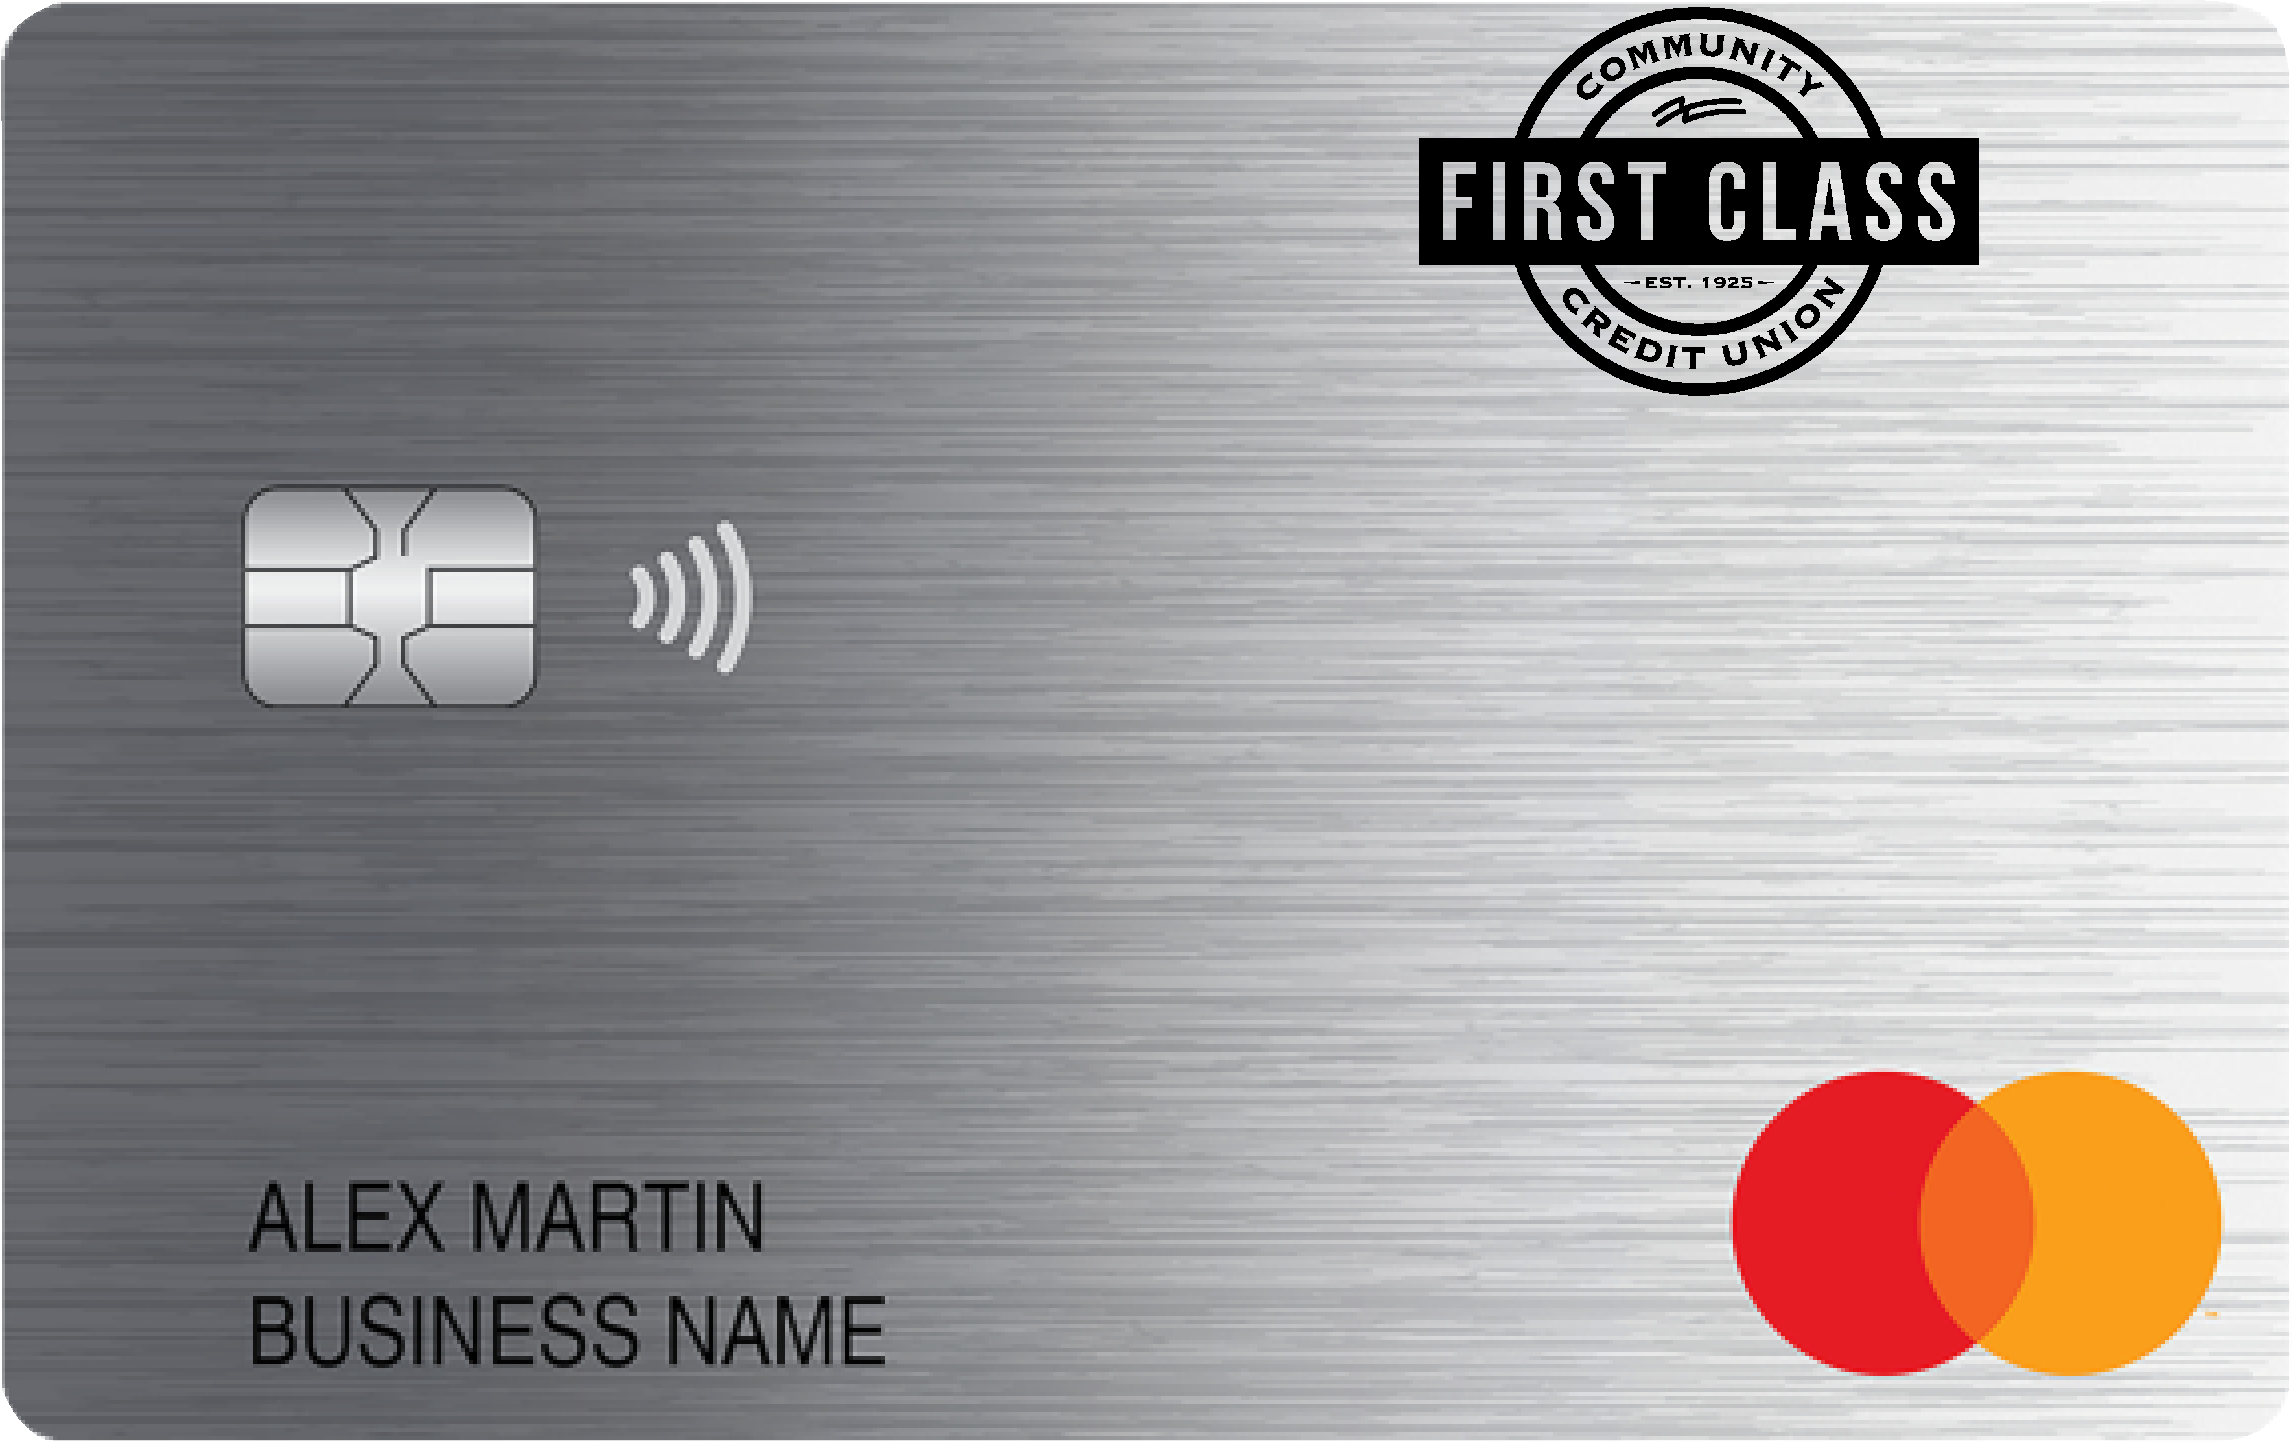 First Class Community Credit Union Smart Business Rewards Card